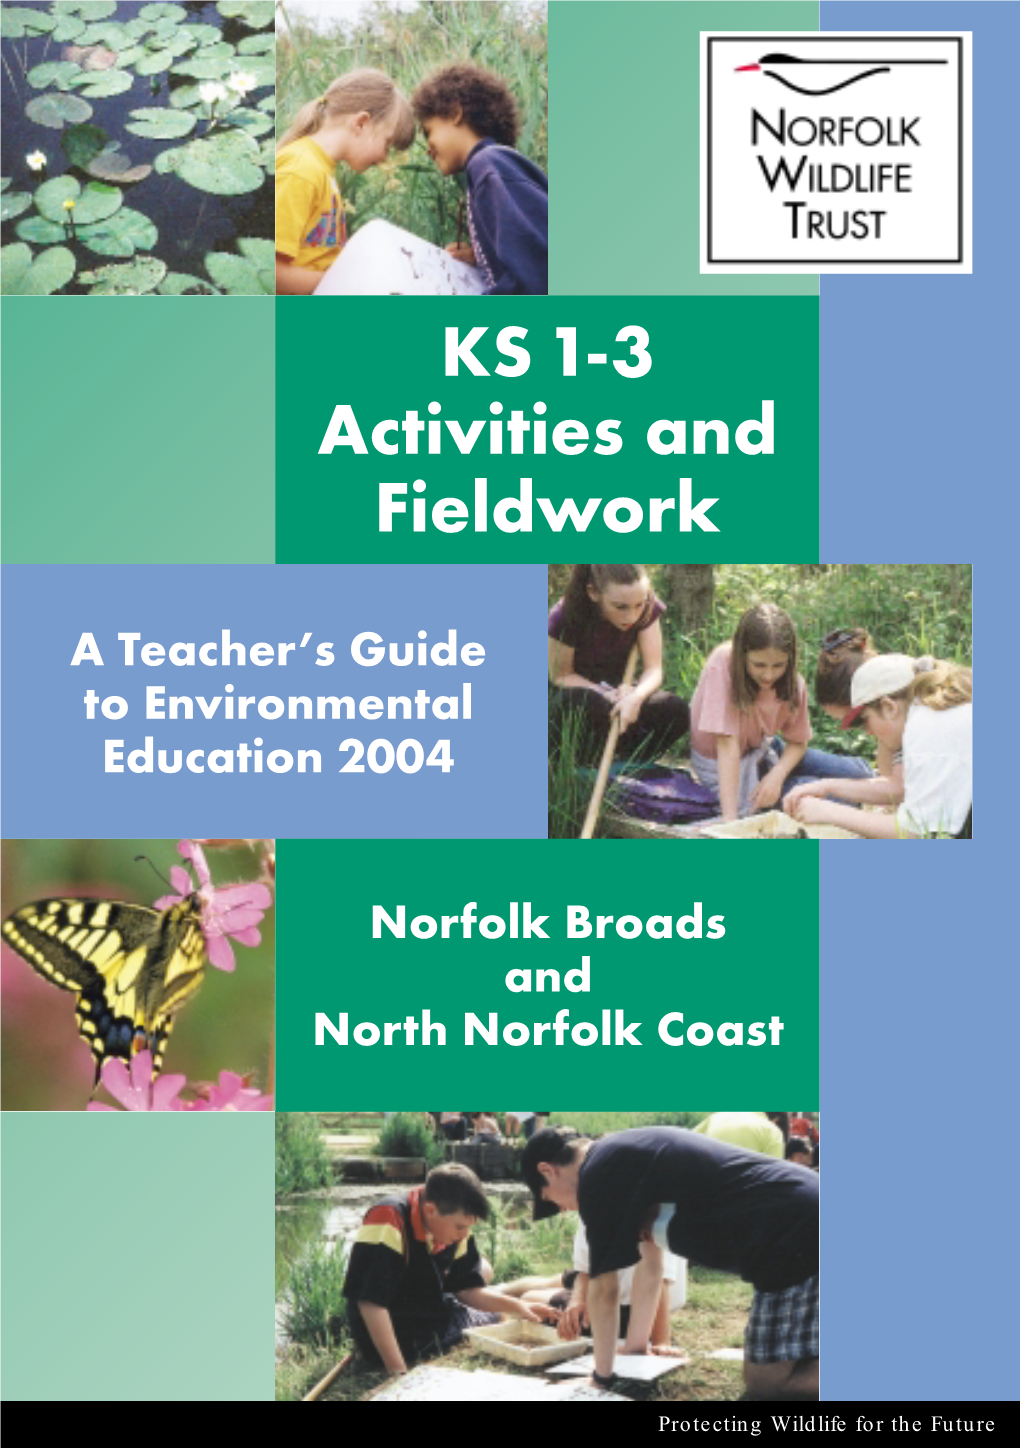 KS 1-3 Activities and Fieldwork